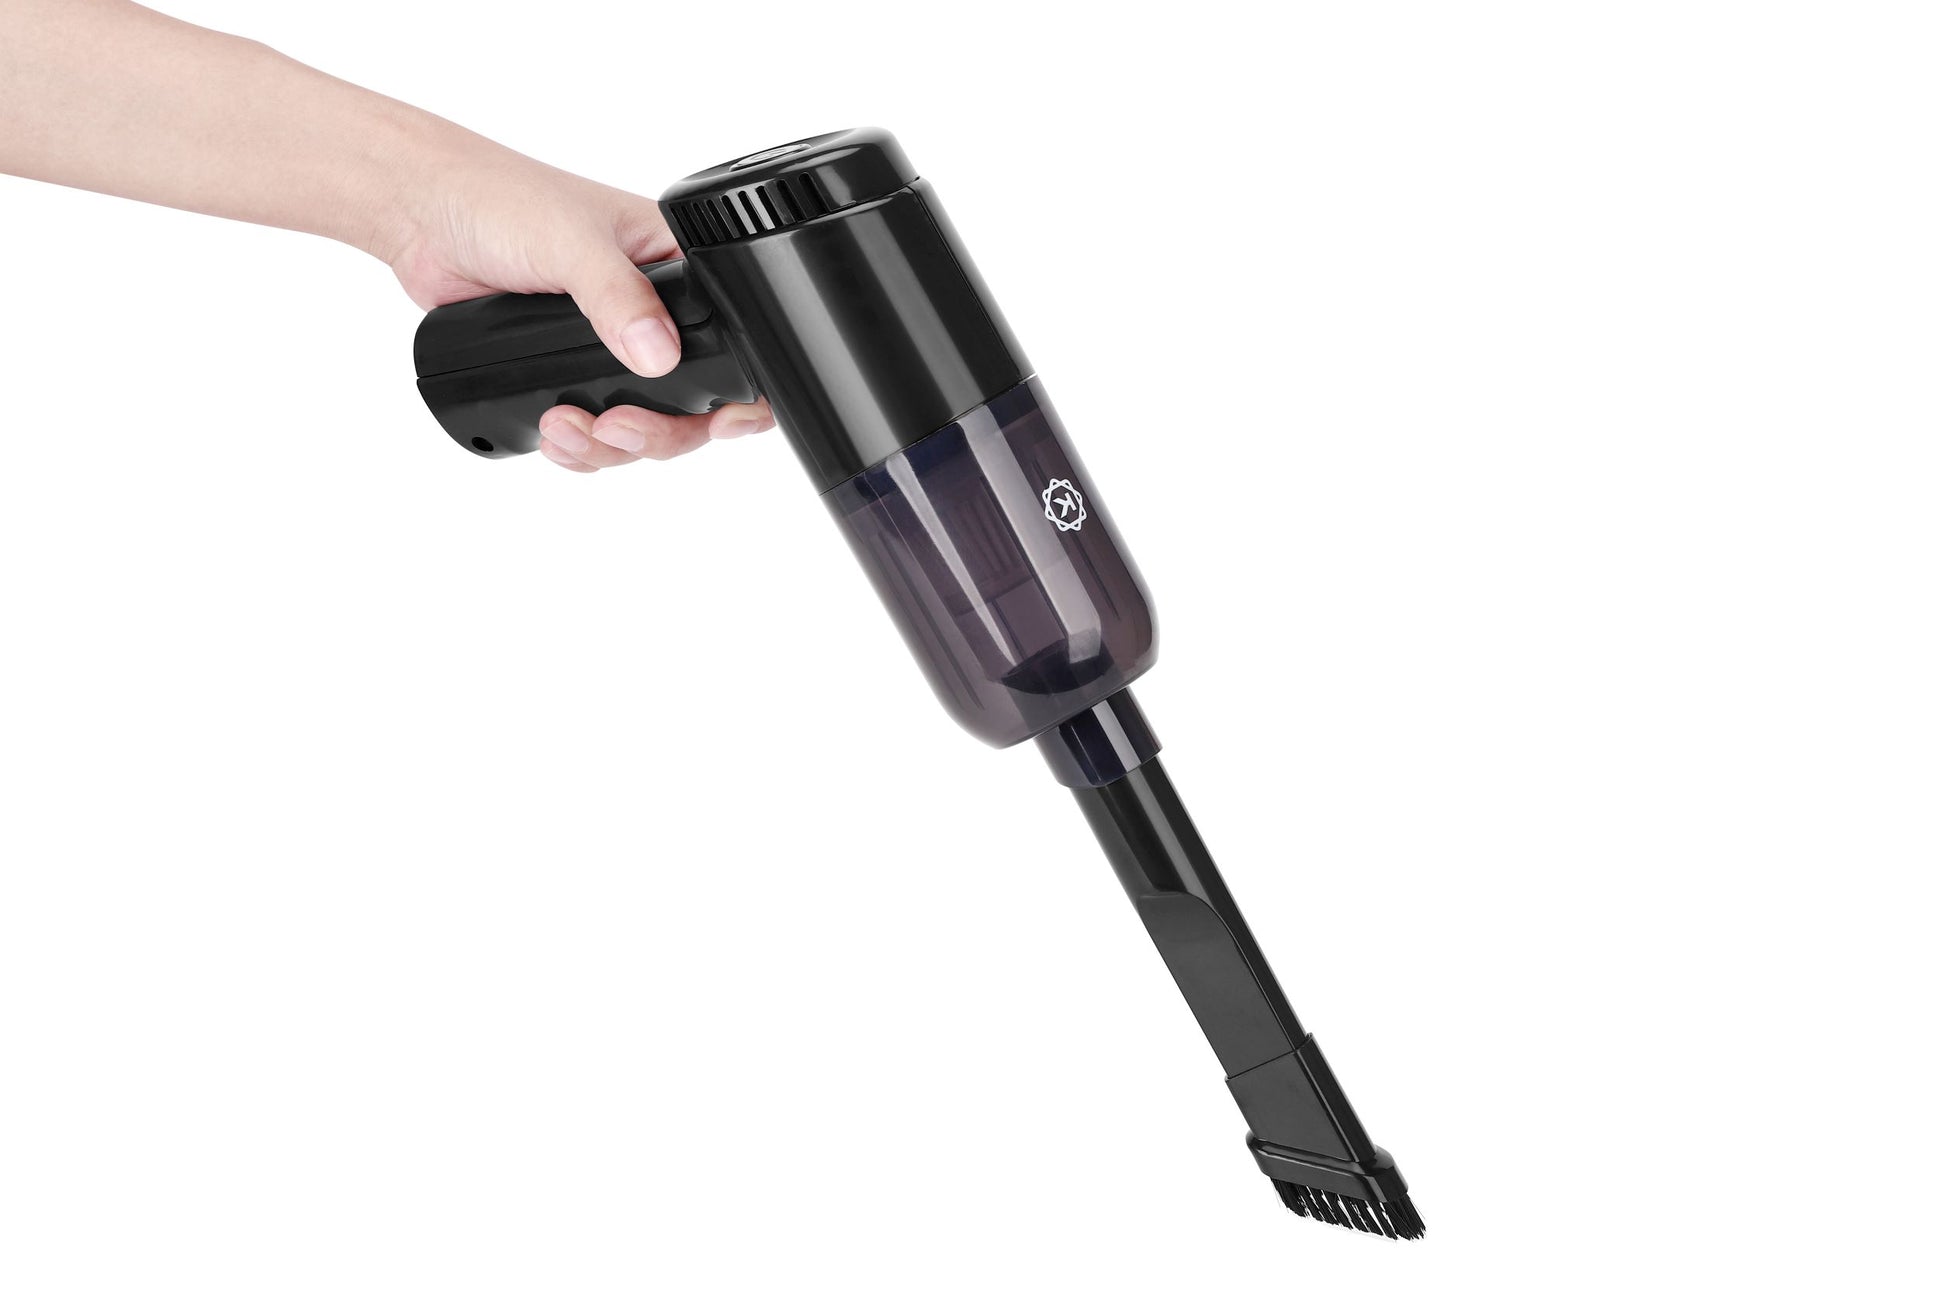 KOBOT Portable Cordless Car Vacuum - Onyx